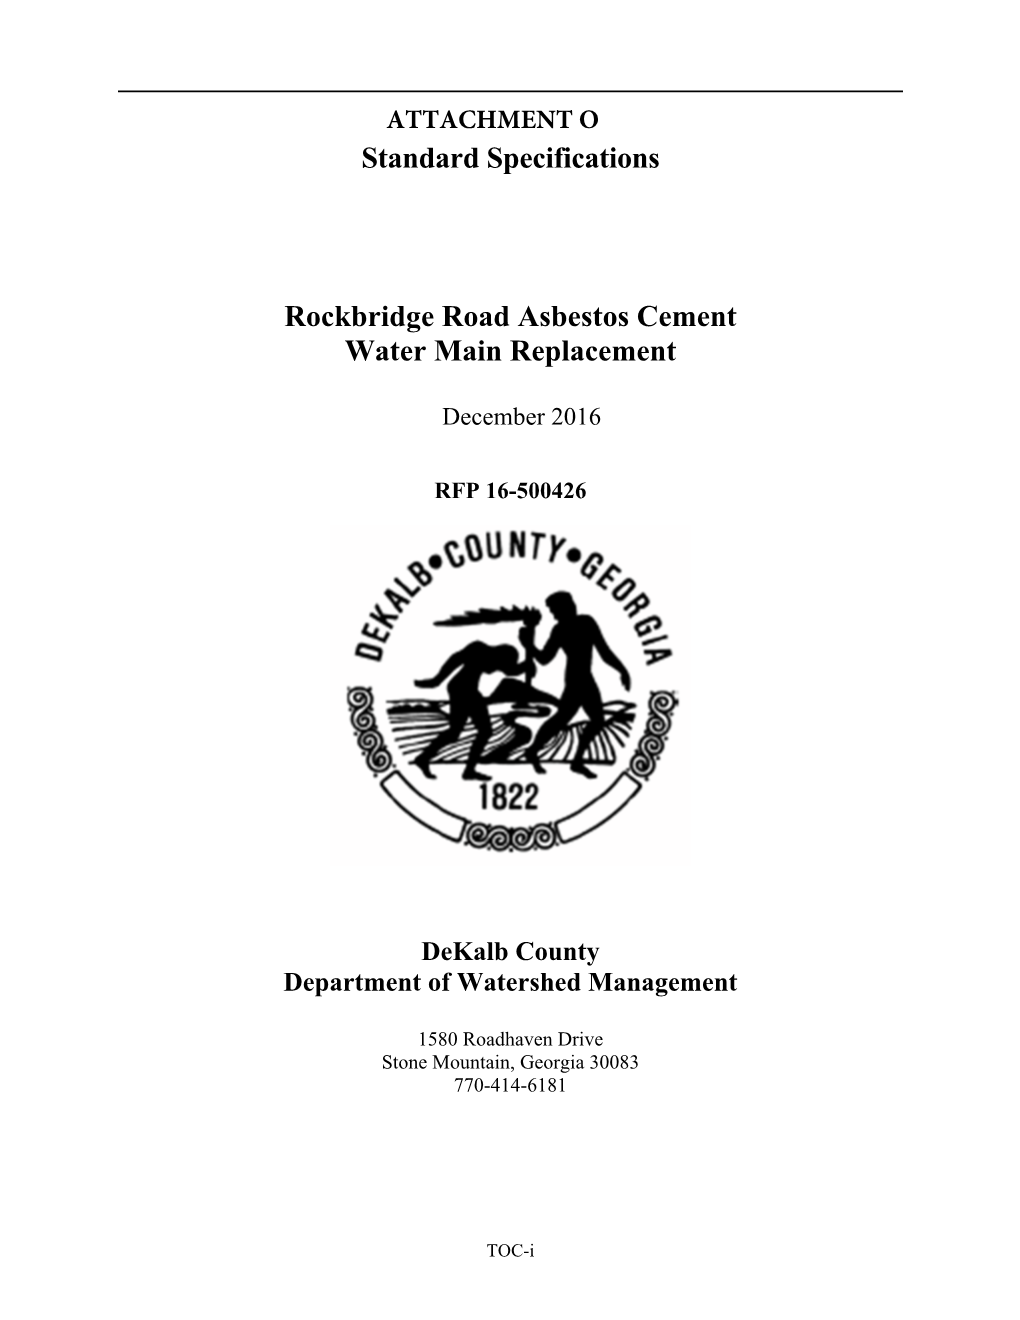 Standard Specifications Rockbridge Road Asbestos Cement Water Main Replacement